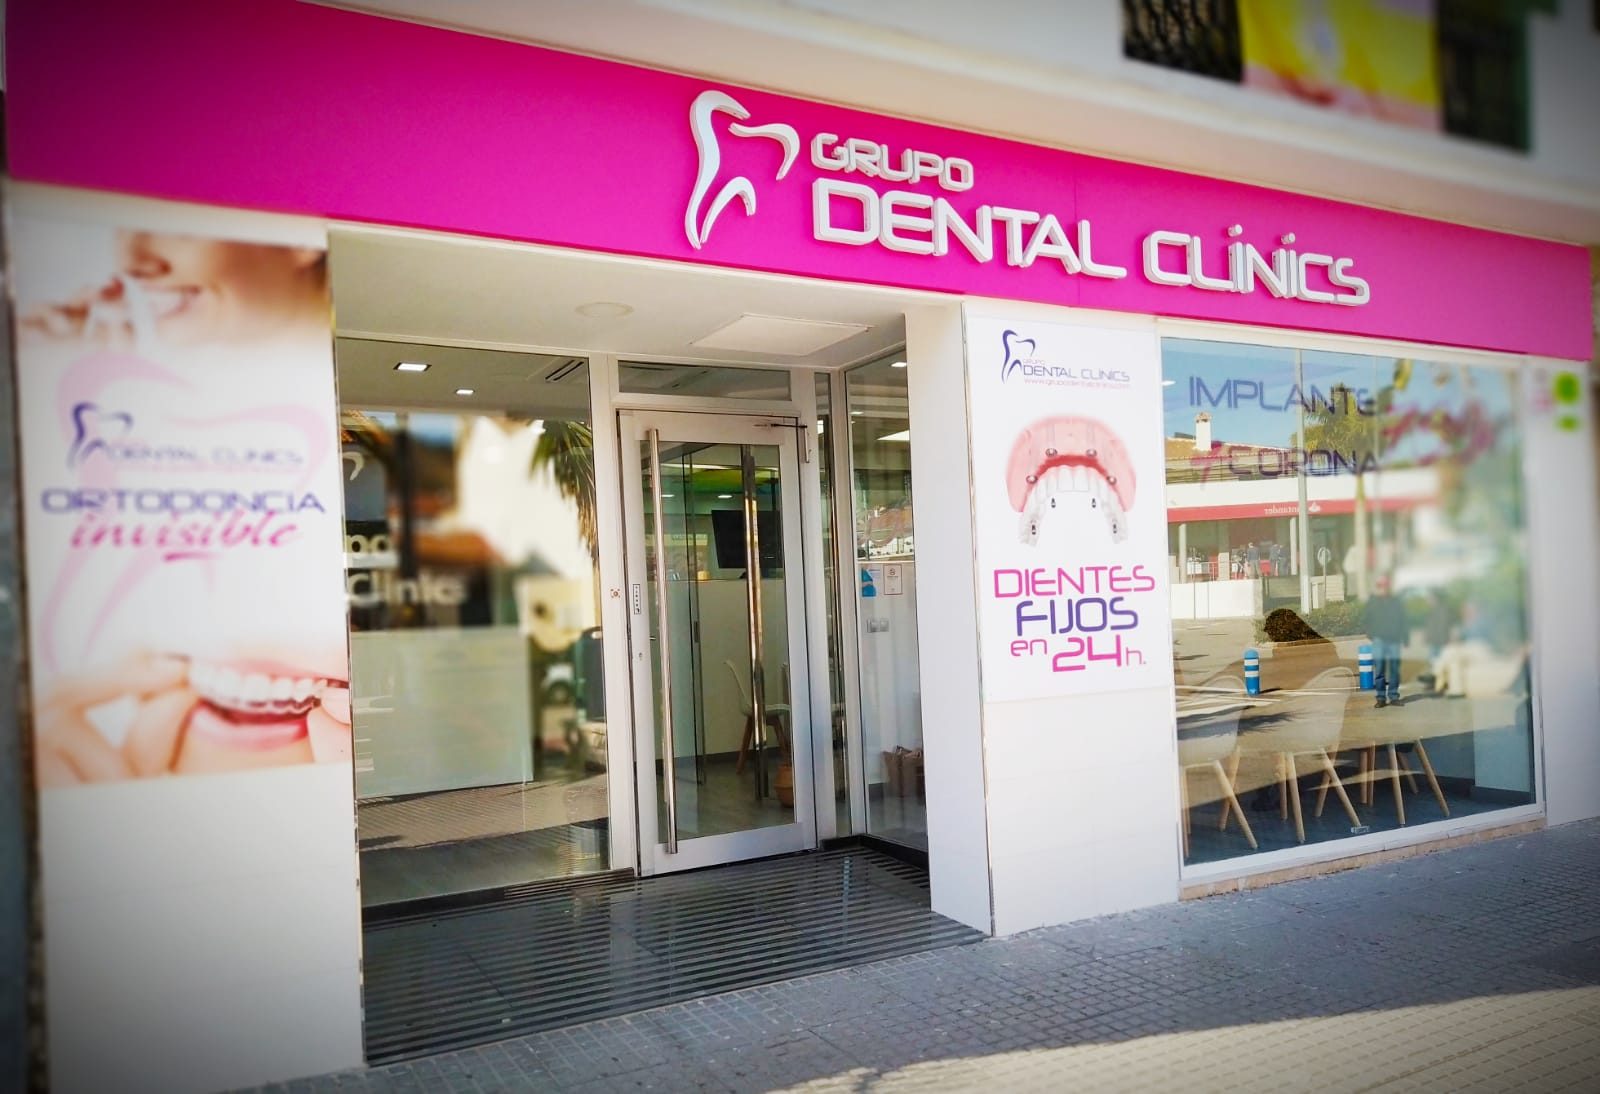 Clínica dental en Málaga Grupo Dental Clinics Puerto de la Torre